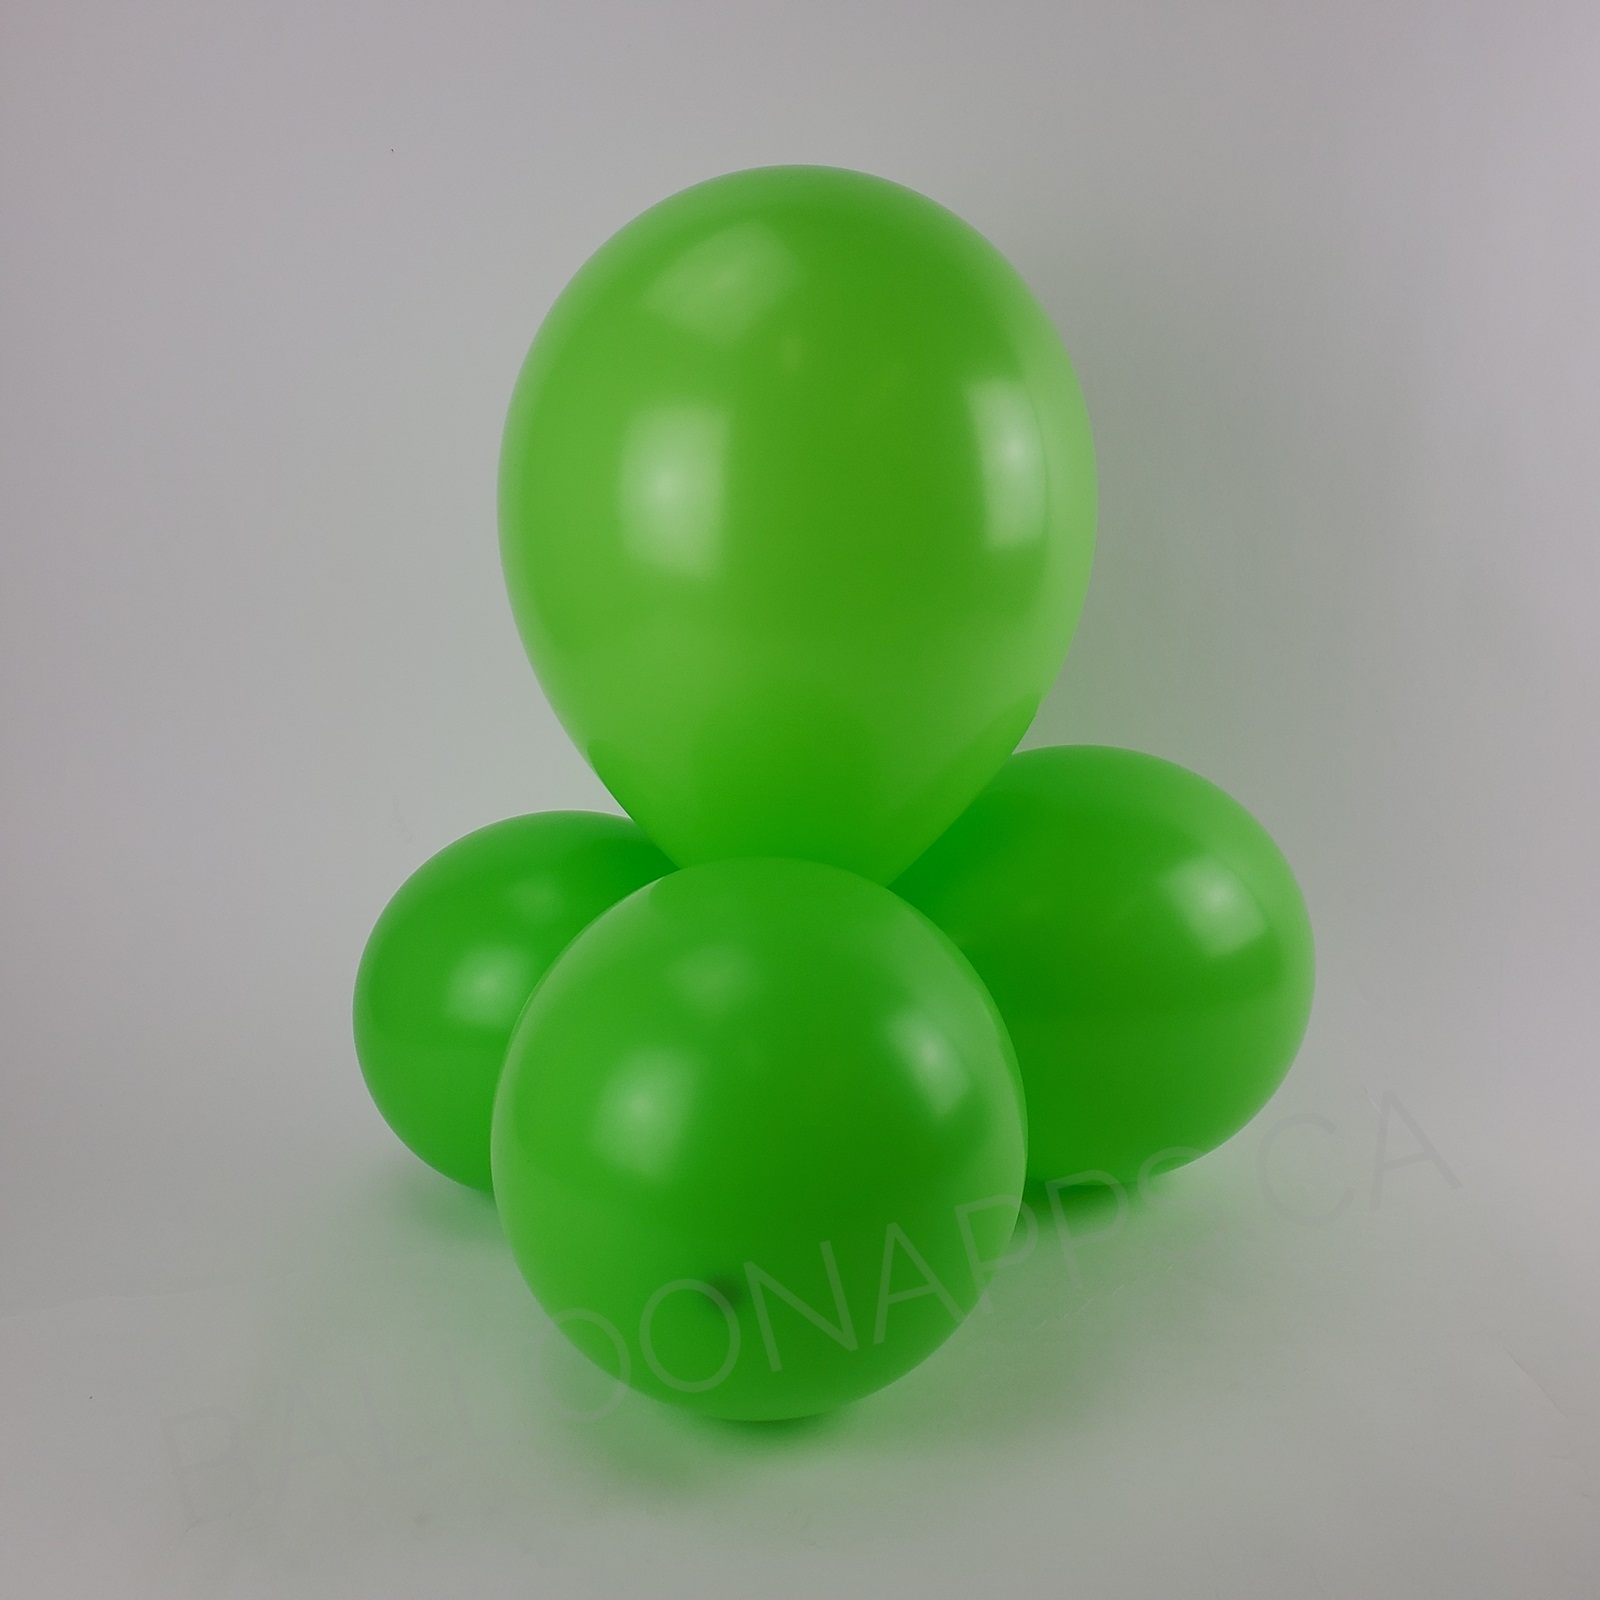 balloon texture BET (100) 160 Deluxe Key Lime balloons